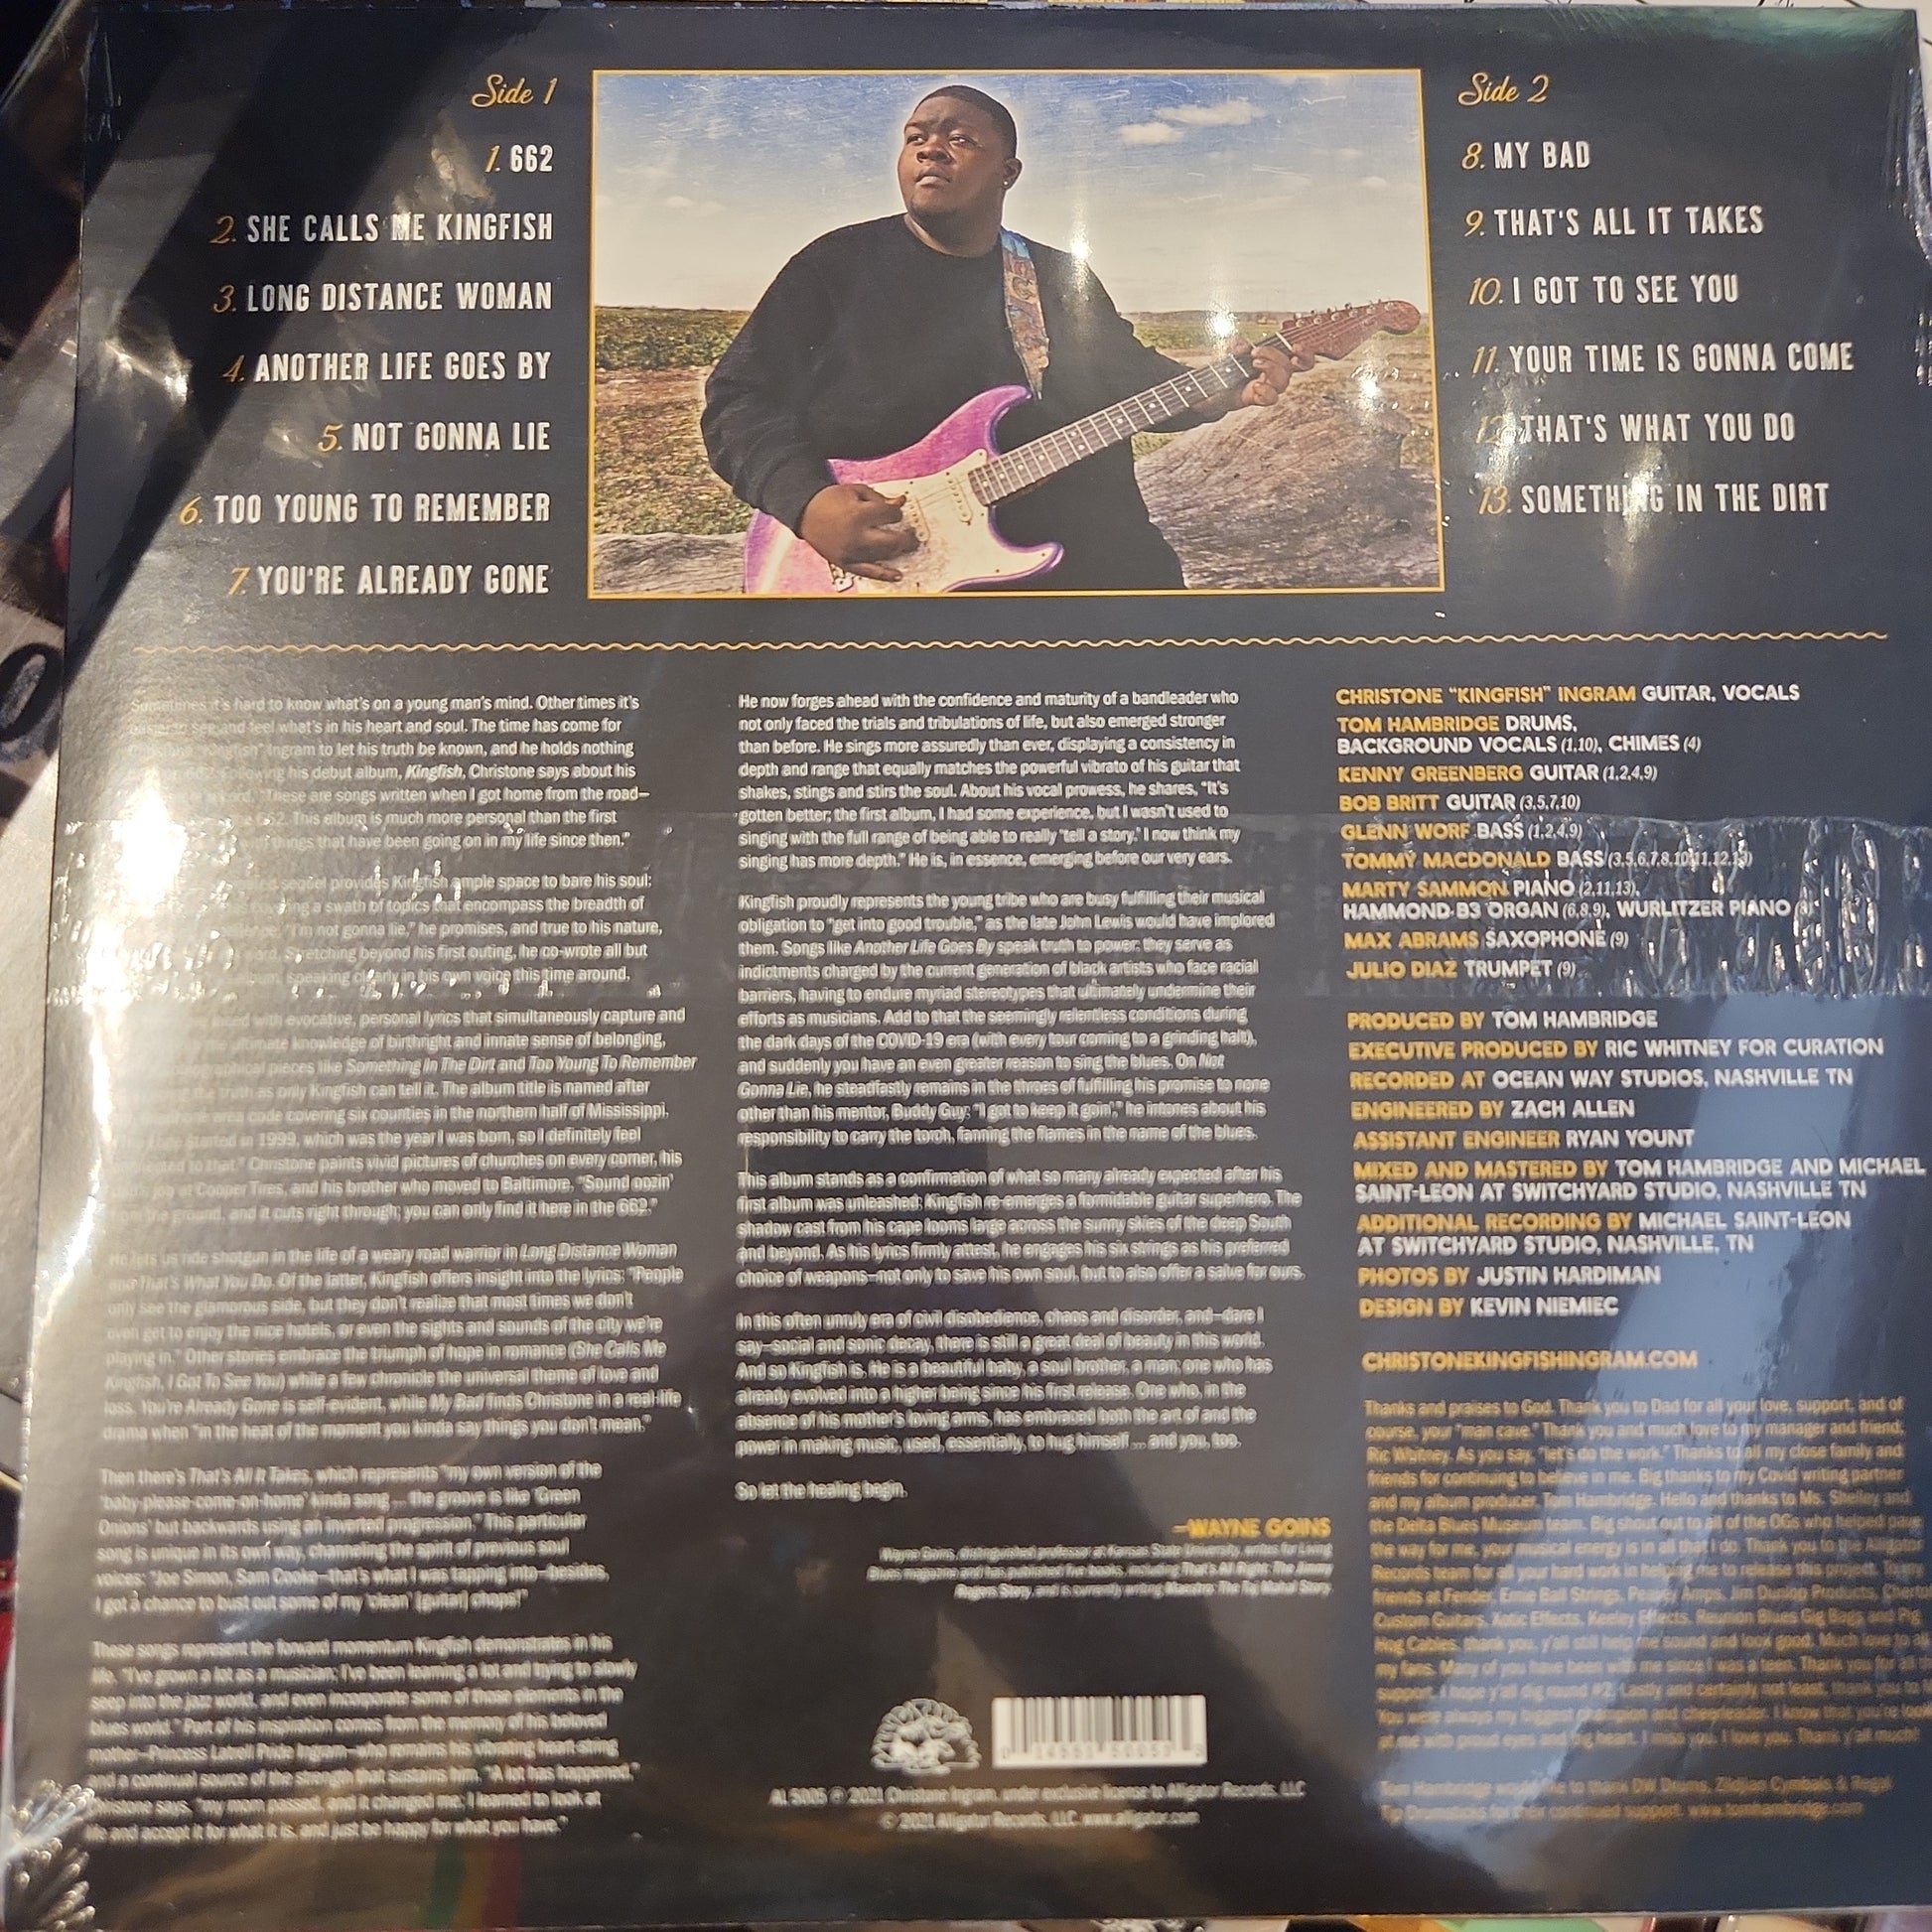 NEW! Christone Kingfish Ingram 662 vinyl LP